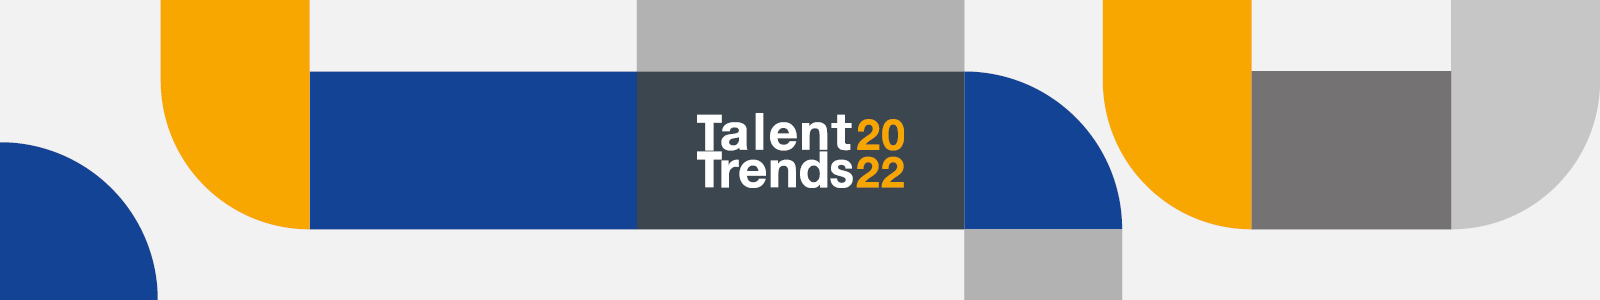 Talent Trends 2022